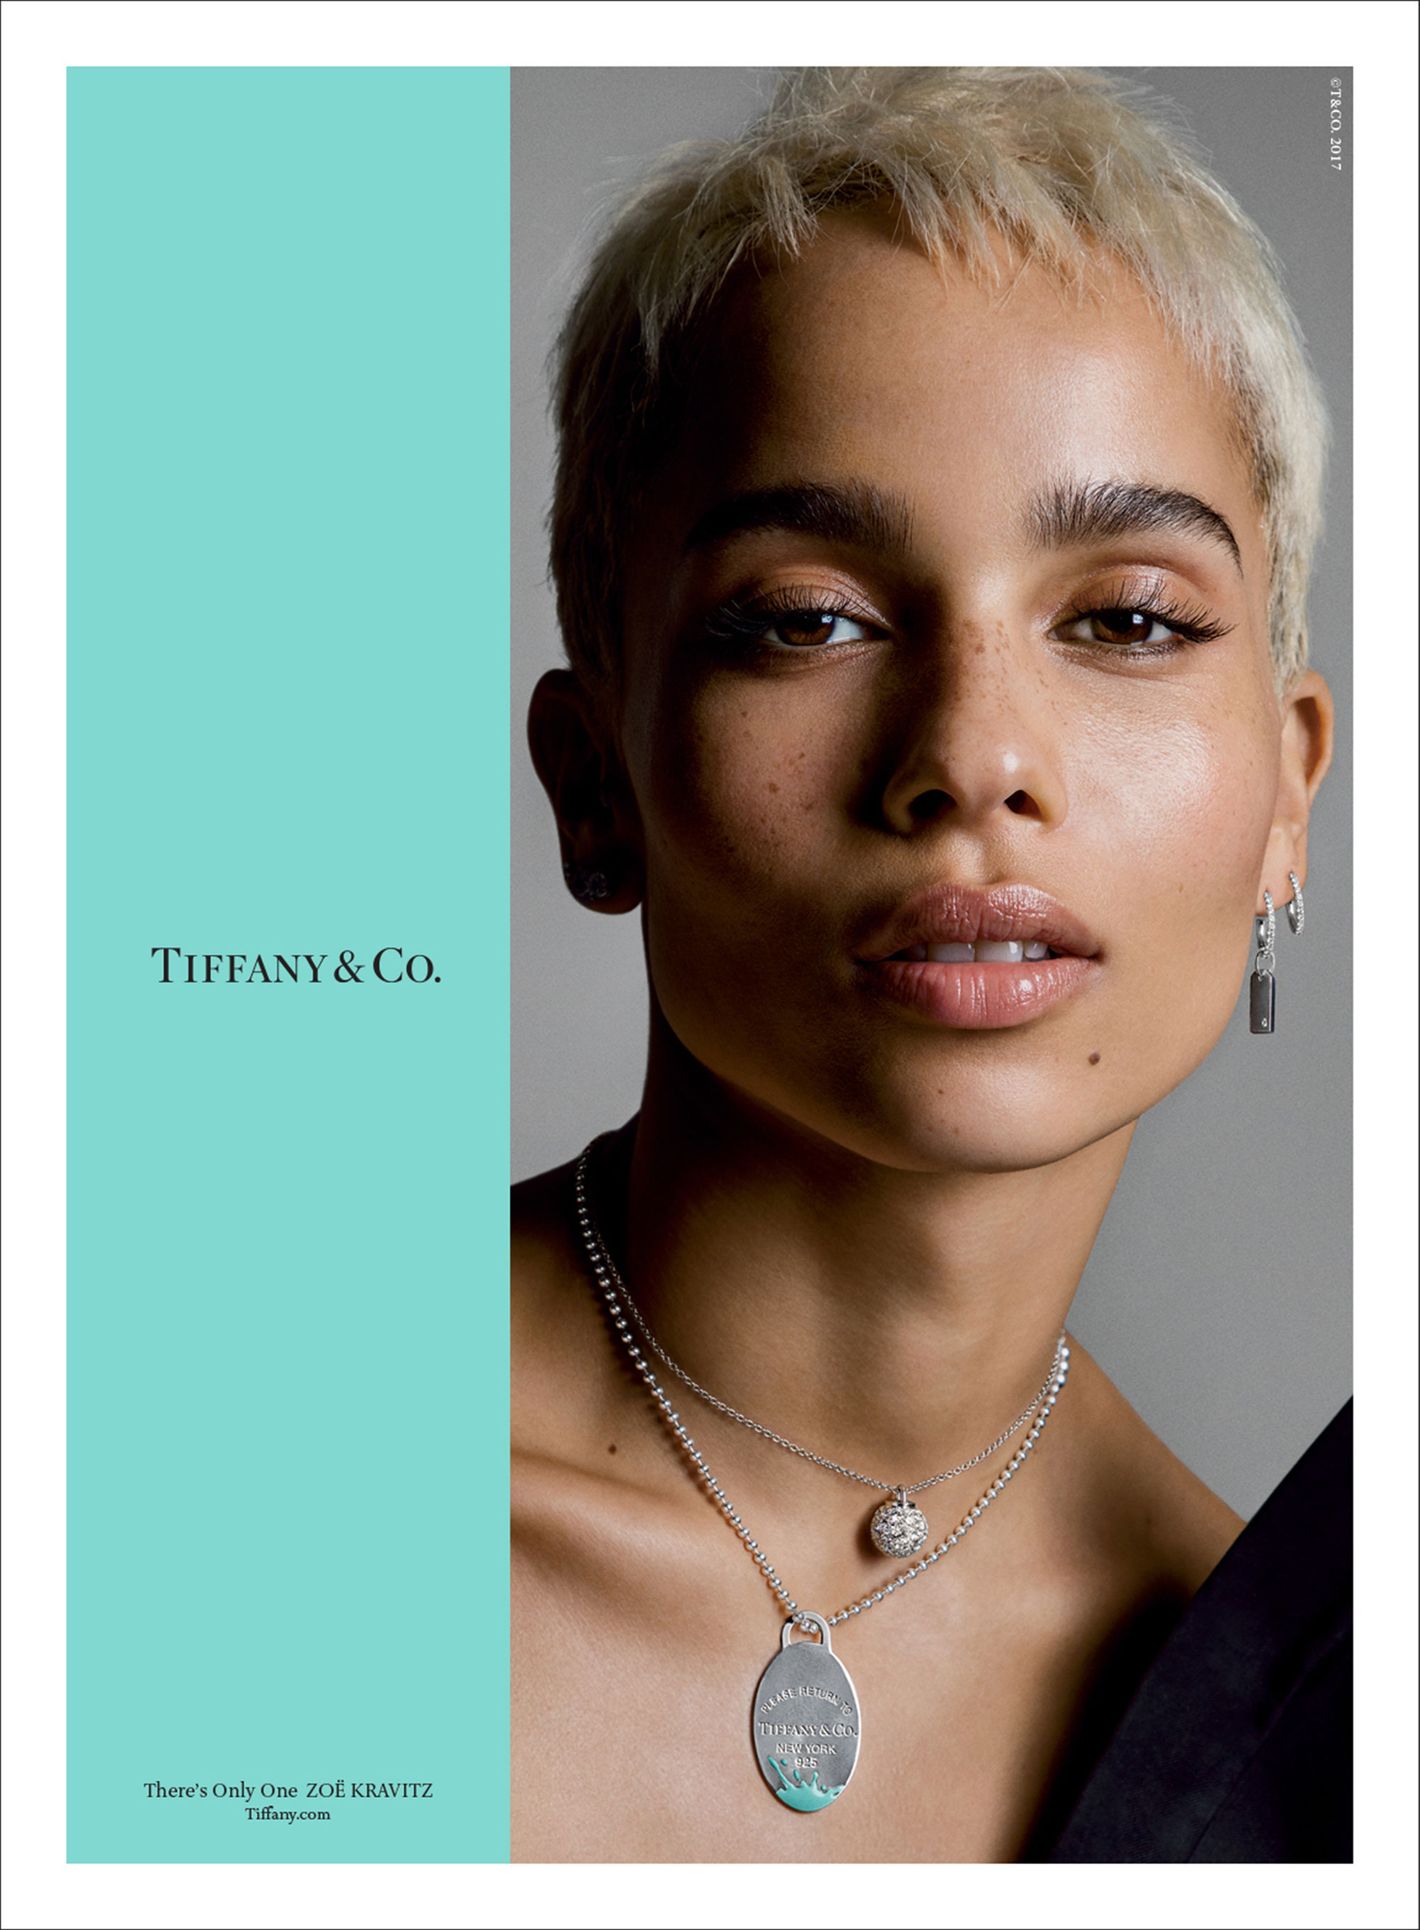 Tiffany & Co.: Color Is a Brand's Best Friend - Platform Magazine